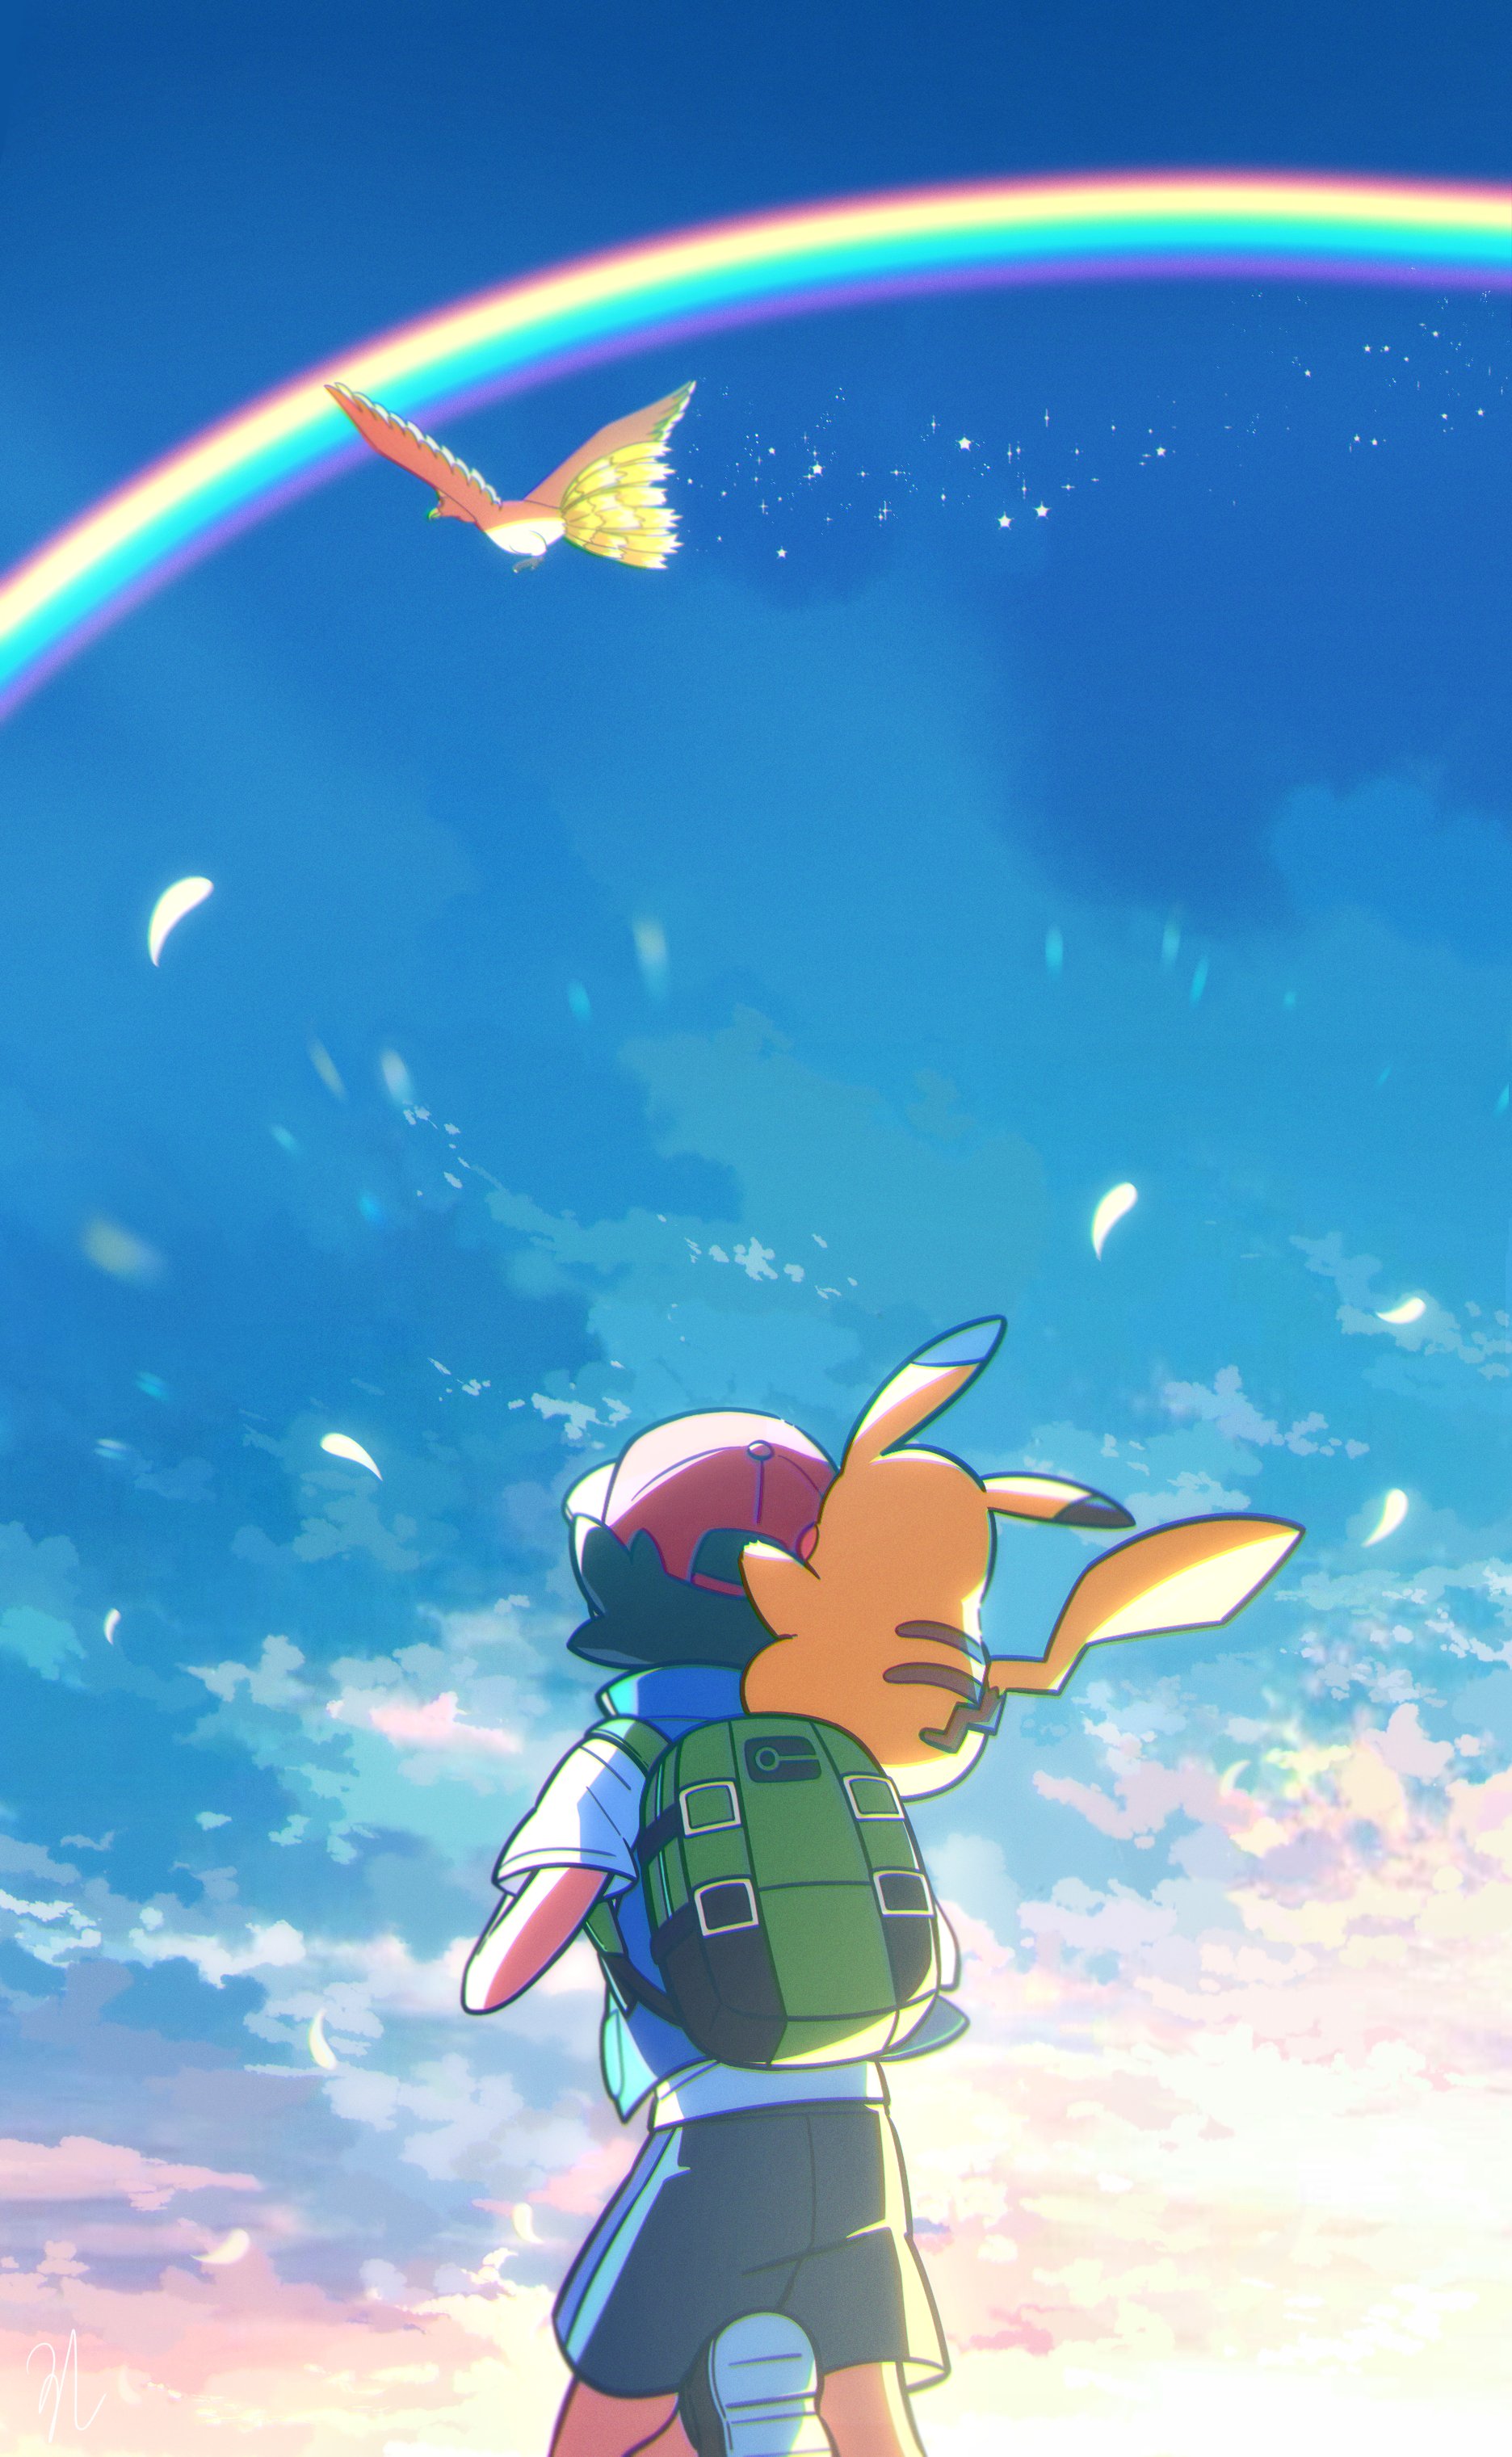 Anime Pokémon Ultimate Journeys: The Series HD Wallpaper